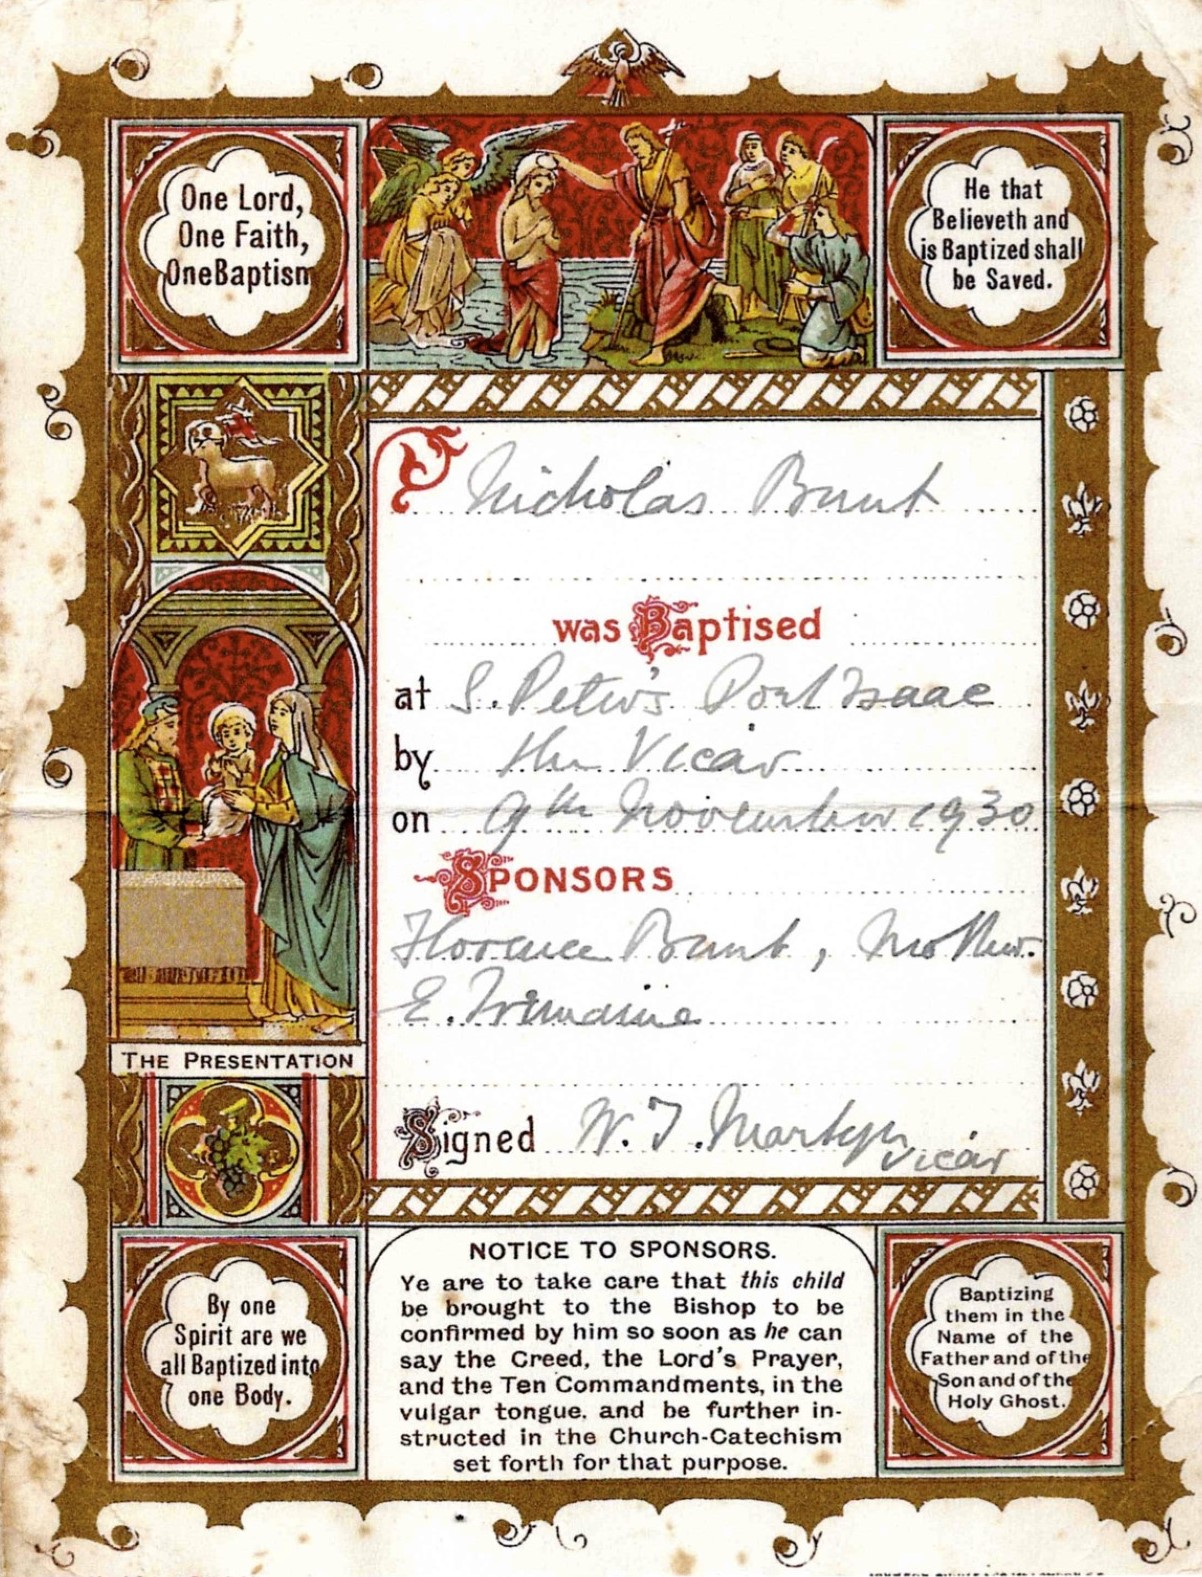 Certificate of Baptism of Nicholas Bunt